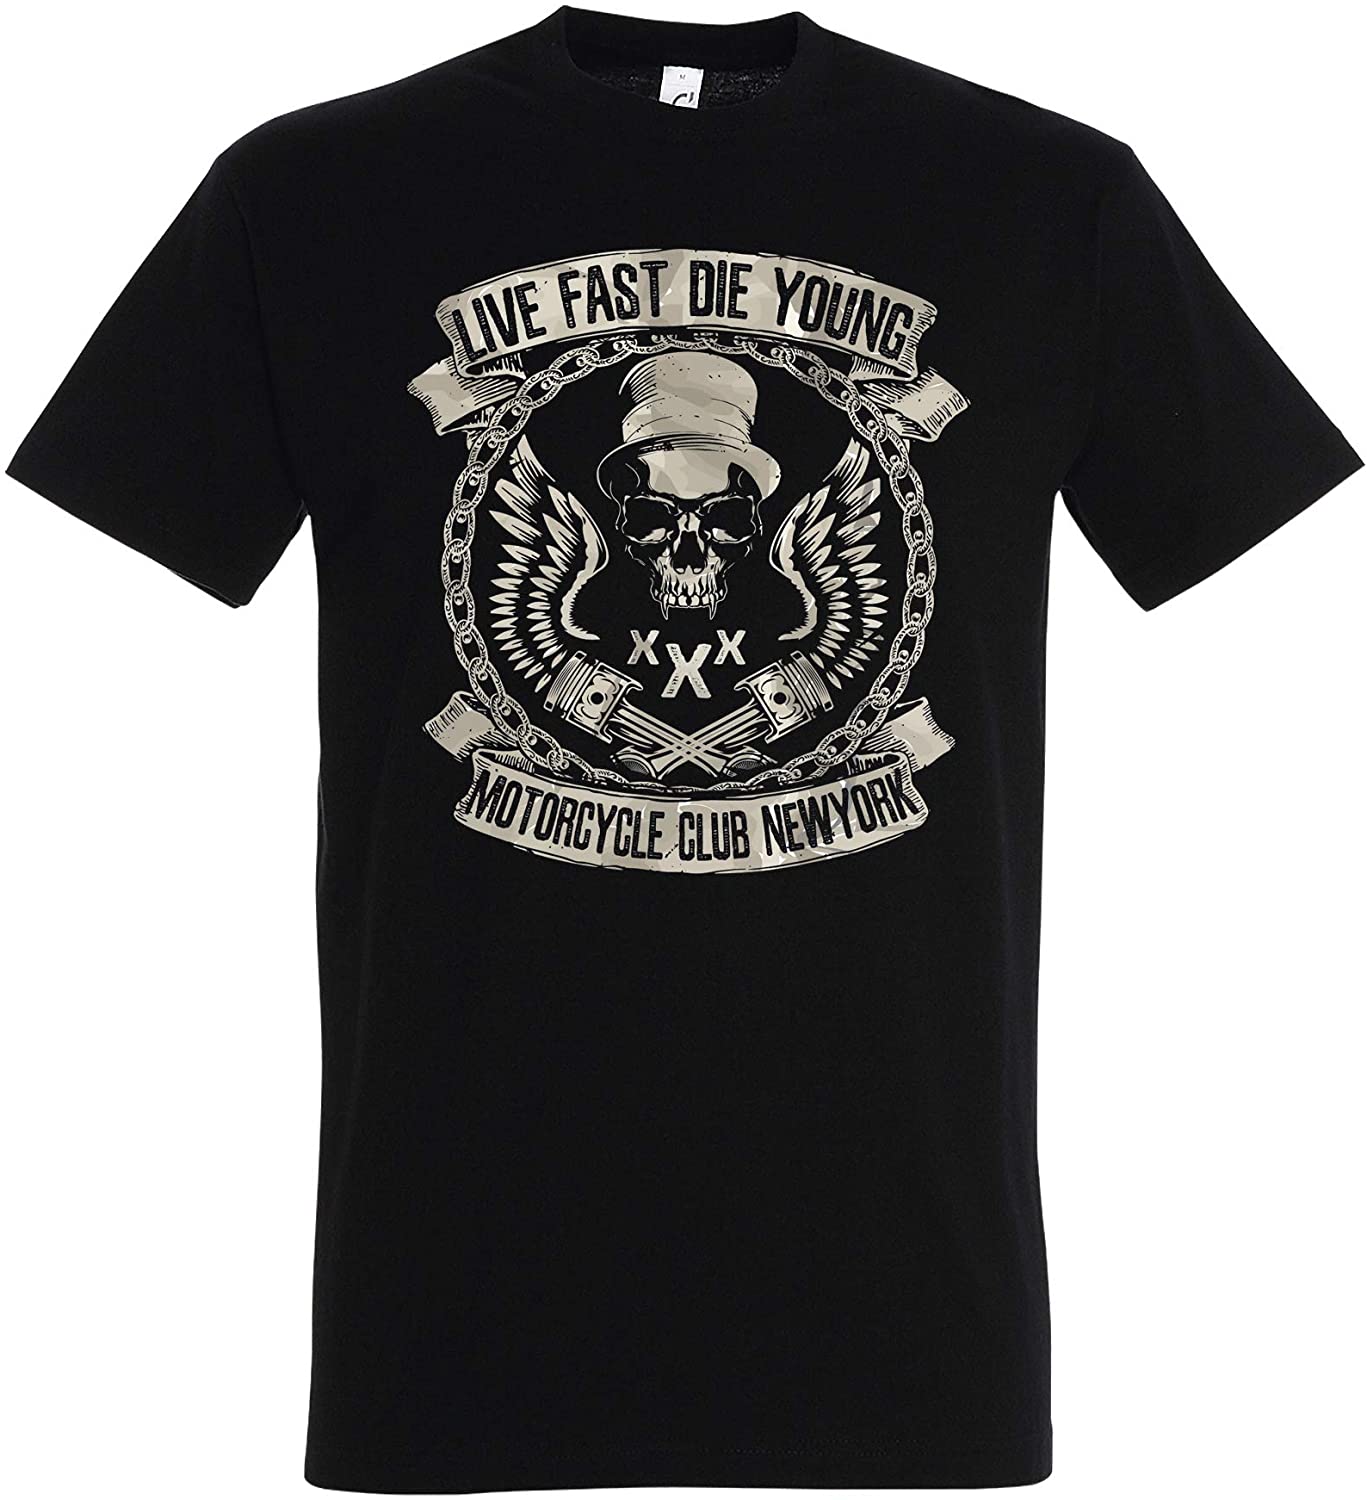 T-Shirt Live Fast die Young, Motorcycle Club New York, Biker, Motorrad MC Totenkopf, Skull